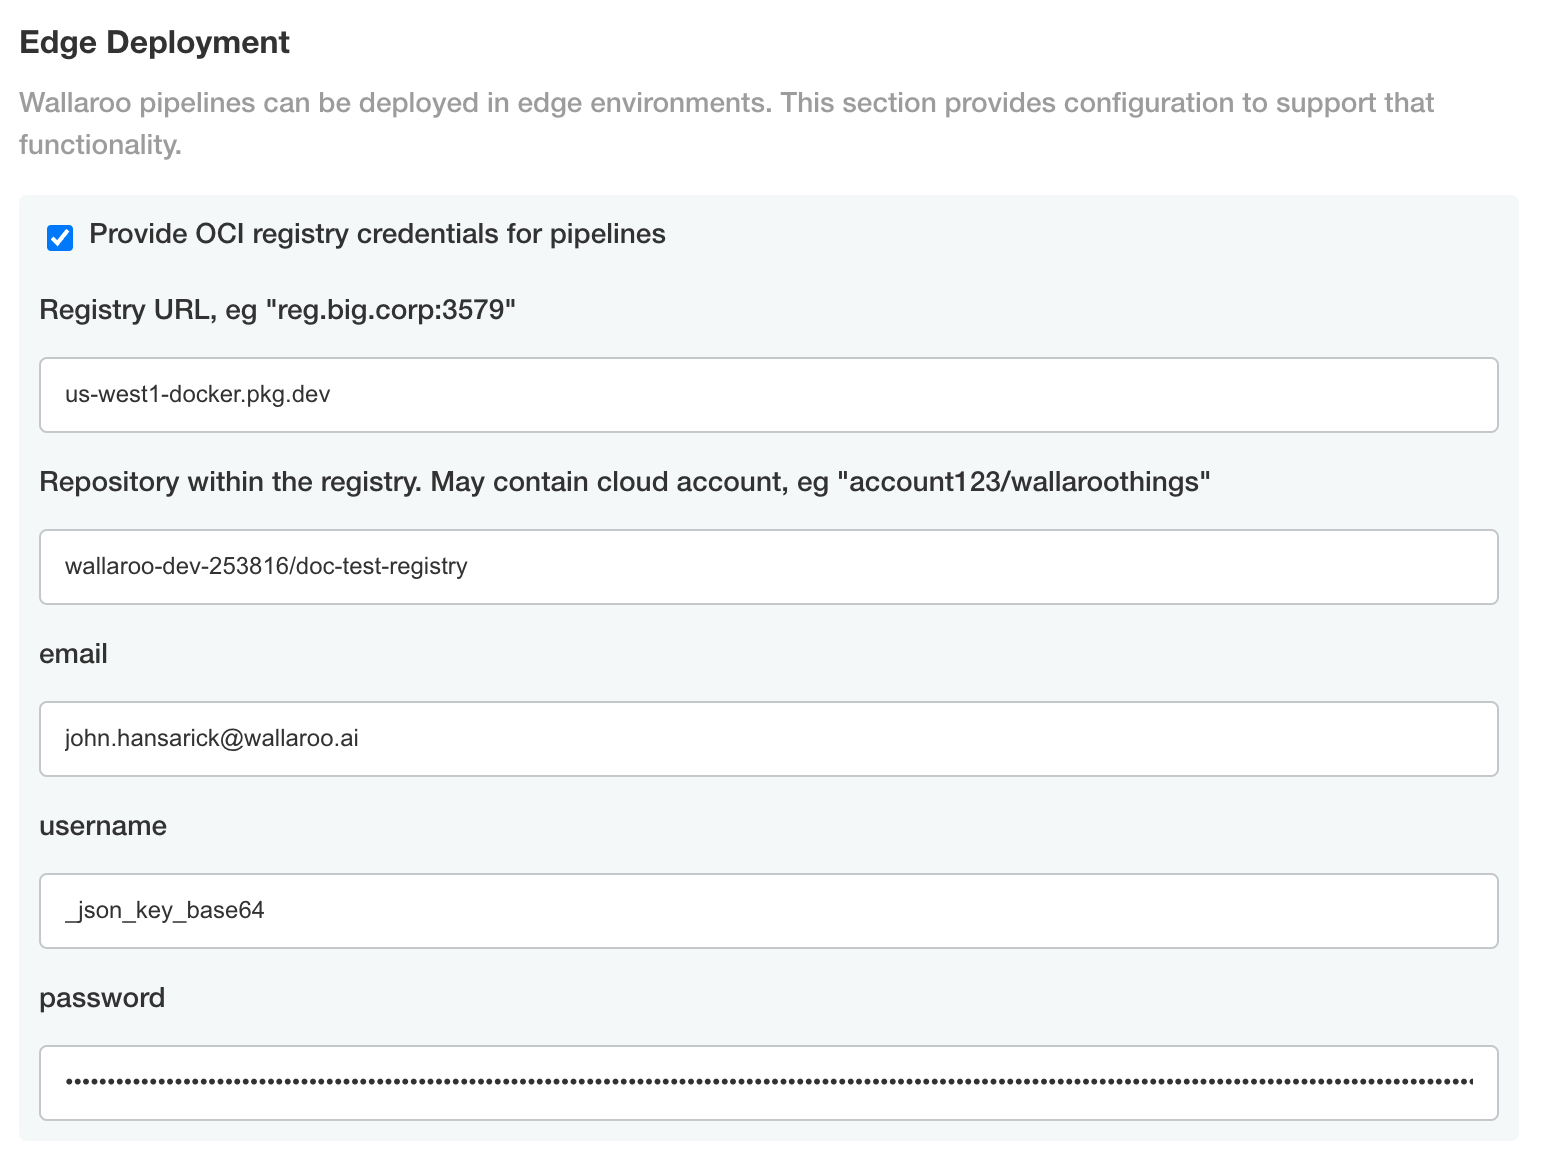 Edge deployment registry service details